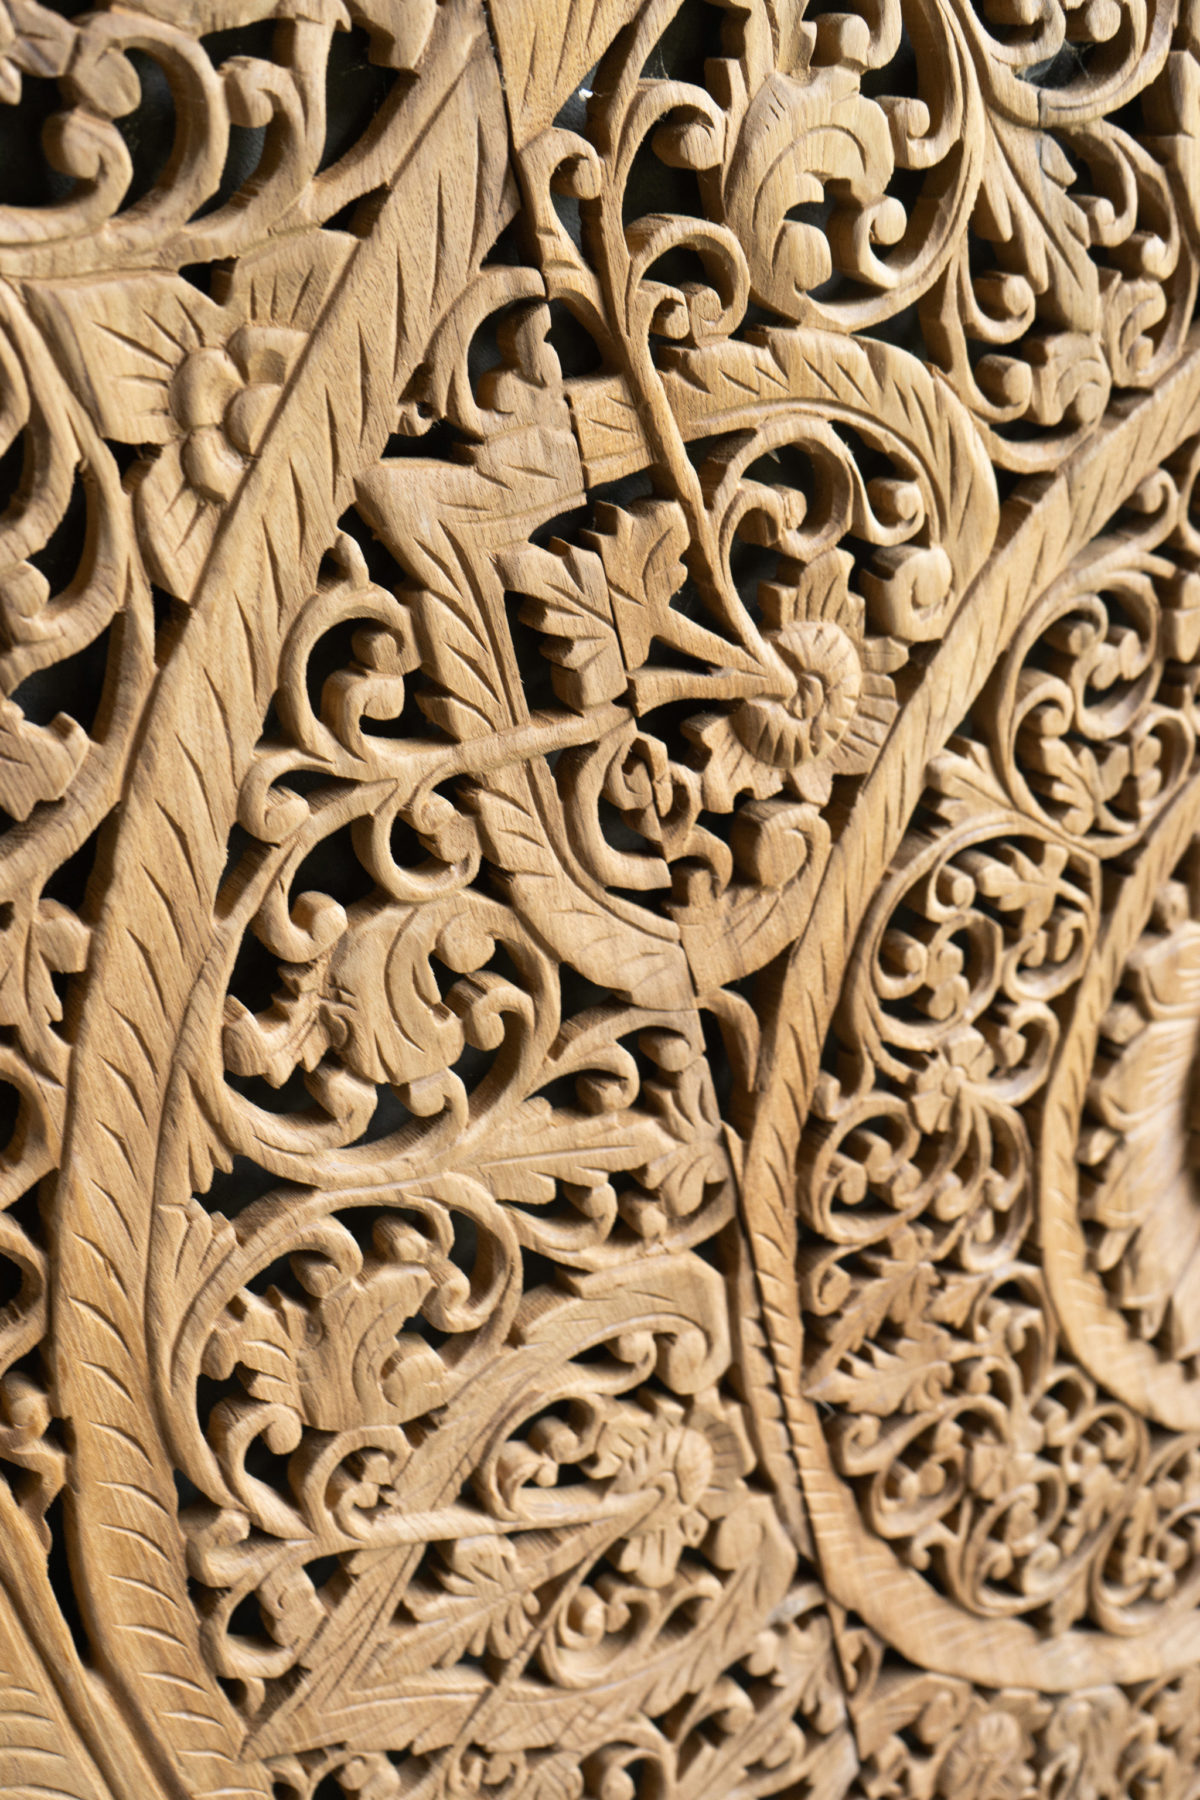 Thai wood carving